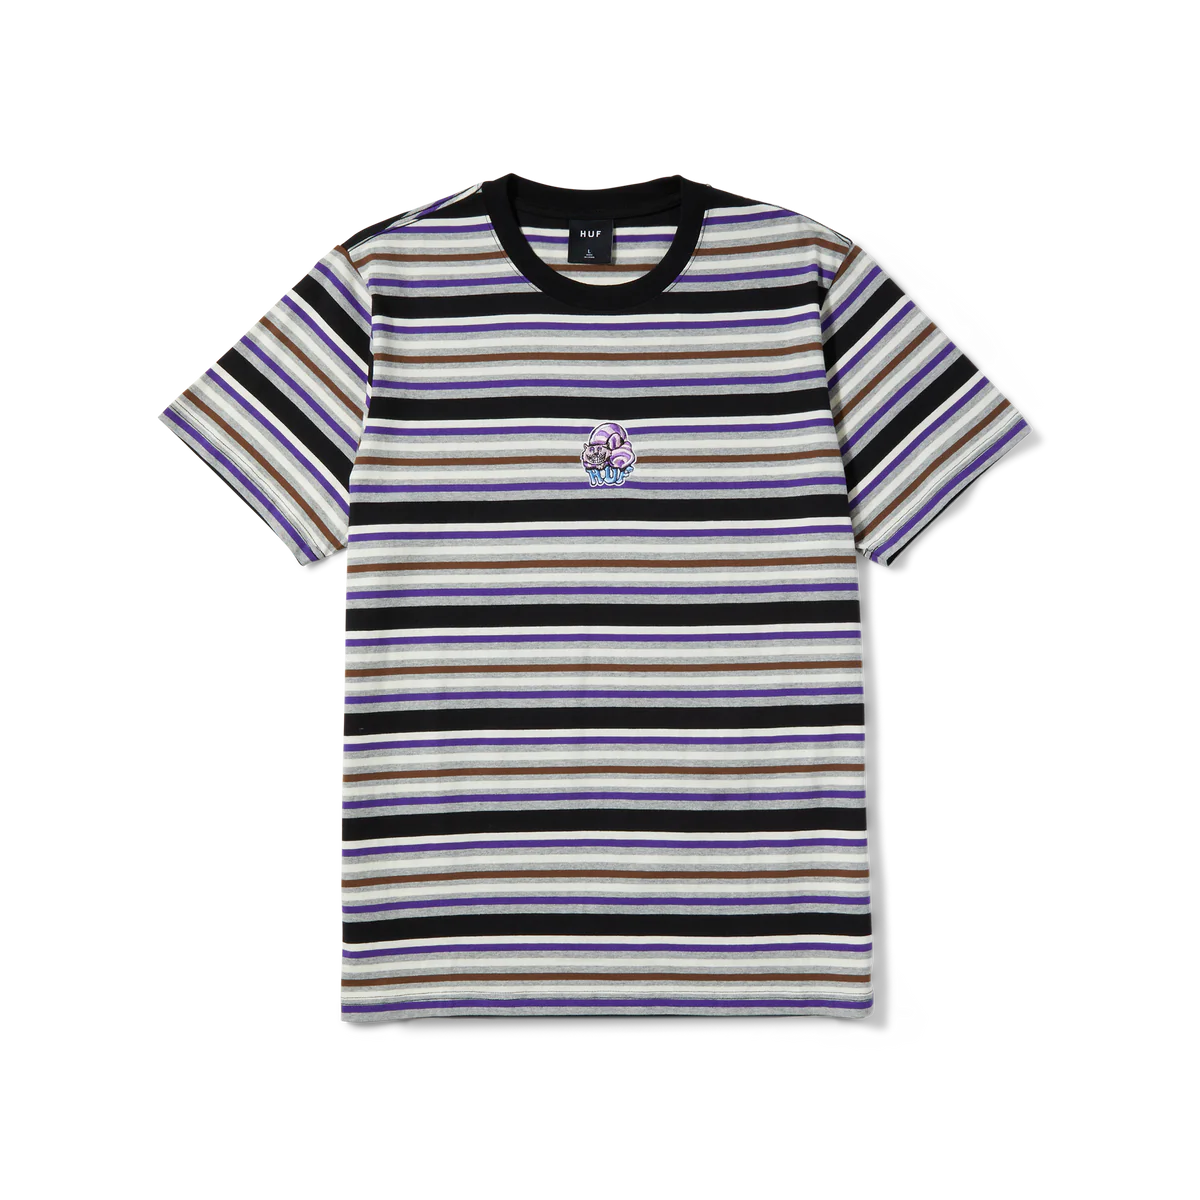 Cheshire S/s Stripe Knit Top (Black)